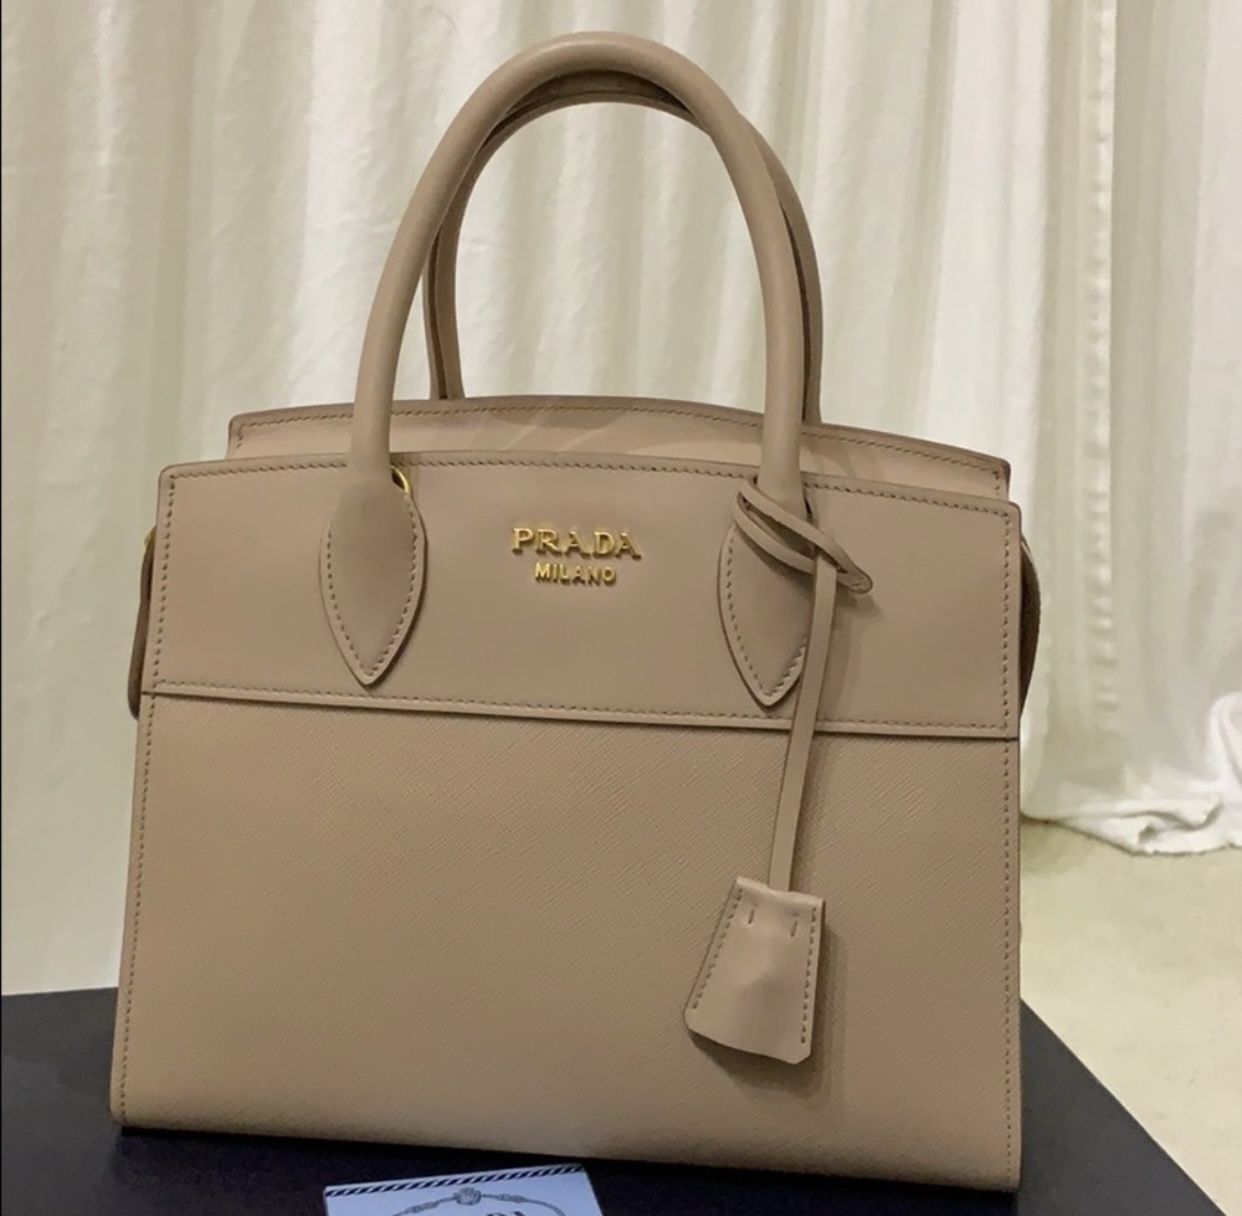 Prada Esplanade Saffiano And City Calf Beige New Small Handbag With Box- Beautiful